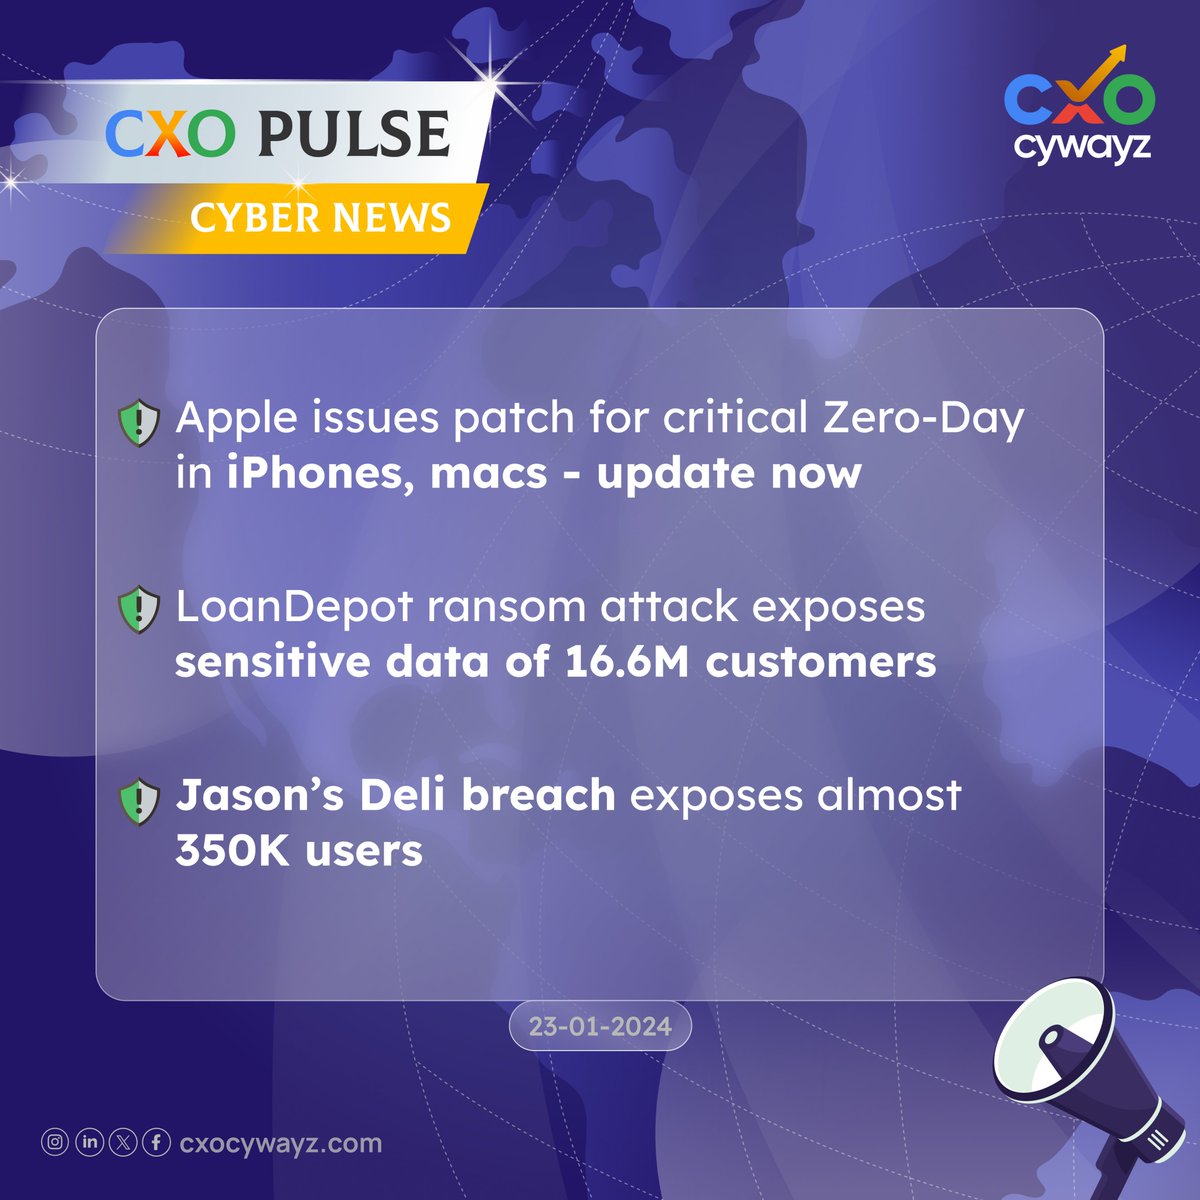 CXO PULSE Cyber News Headlines🚨

#cxopulse #cxocywayz #ApplePatch #ZeroDayFix #MacUpdate #LoanDepotRansomAttack #DataBreach #SensitiveDataExposed #CustomerPrivacy #JasonsDeliBreach #UserSecurity #Cybersecurity